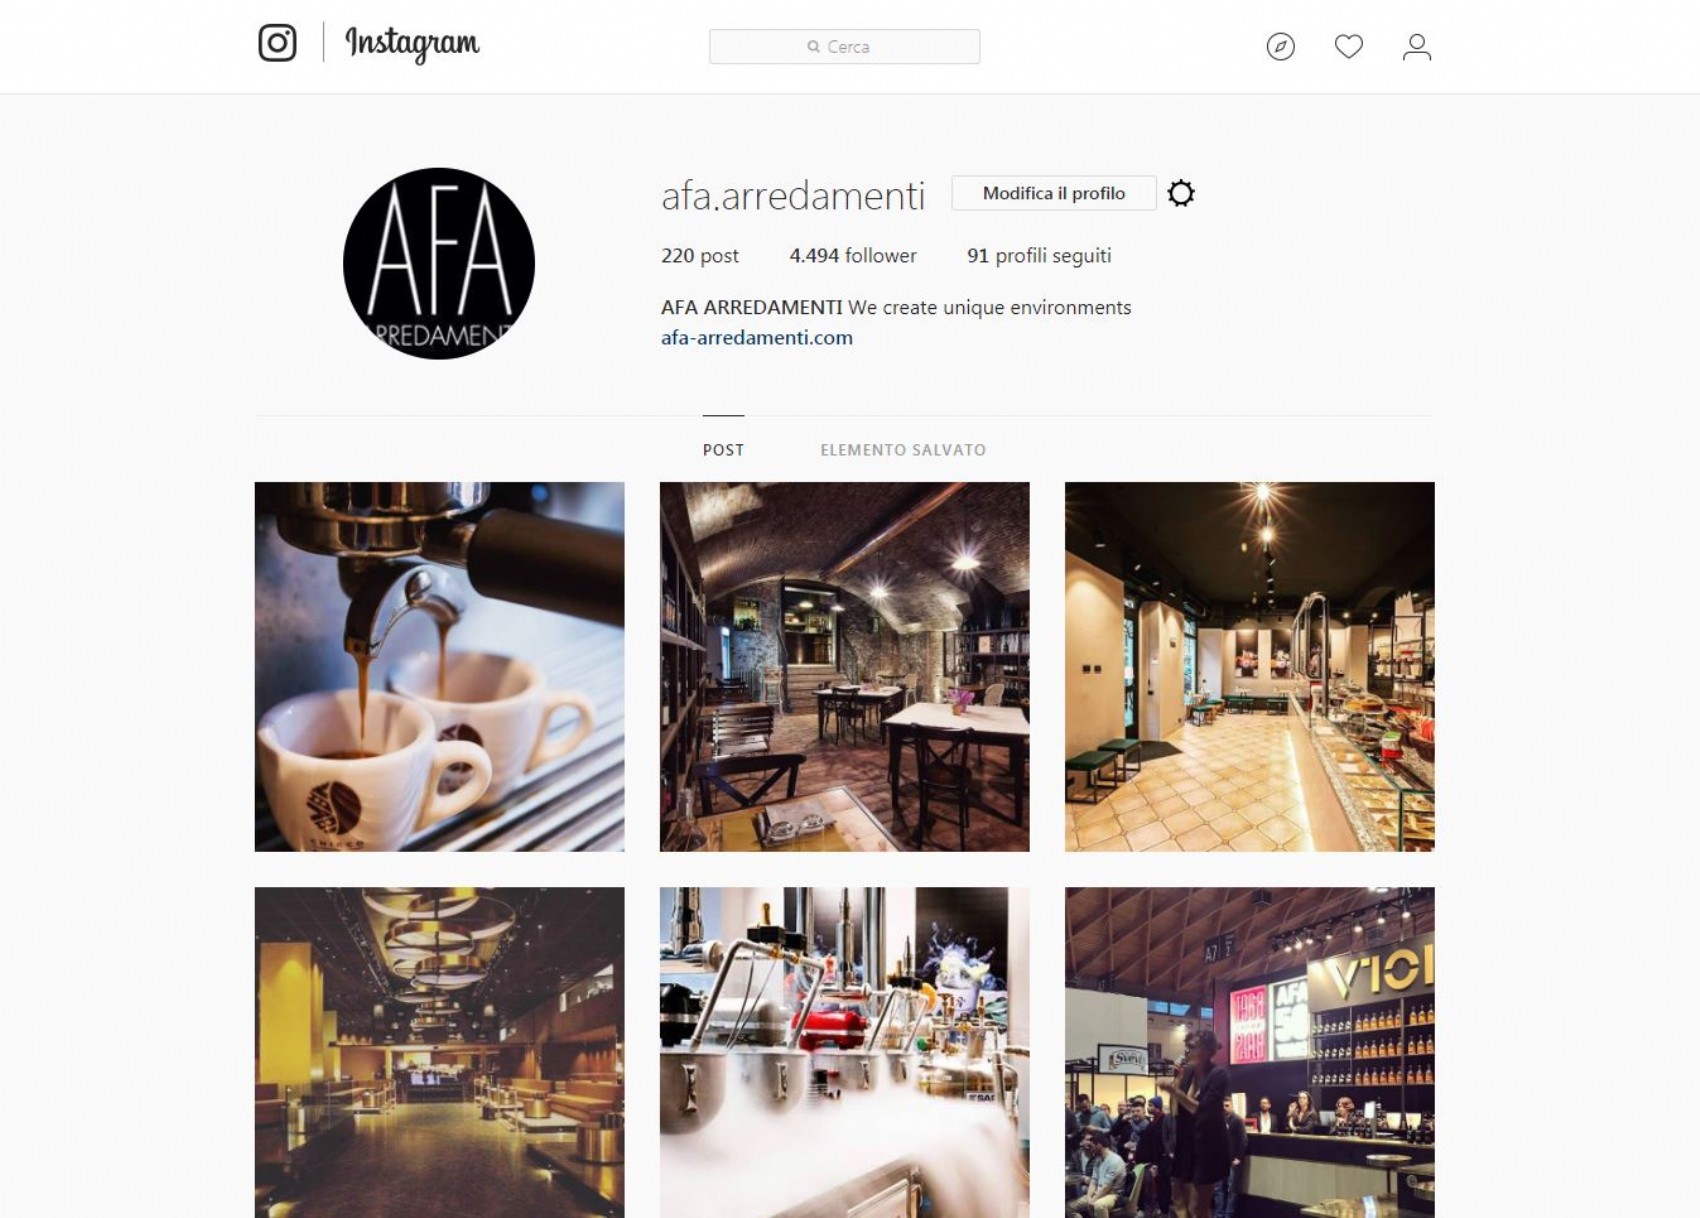 AFA Arredamenti on Instagram: Follow us!